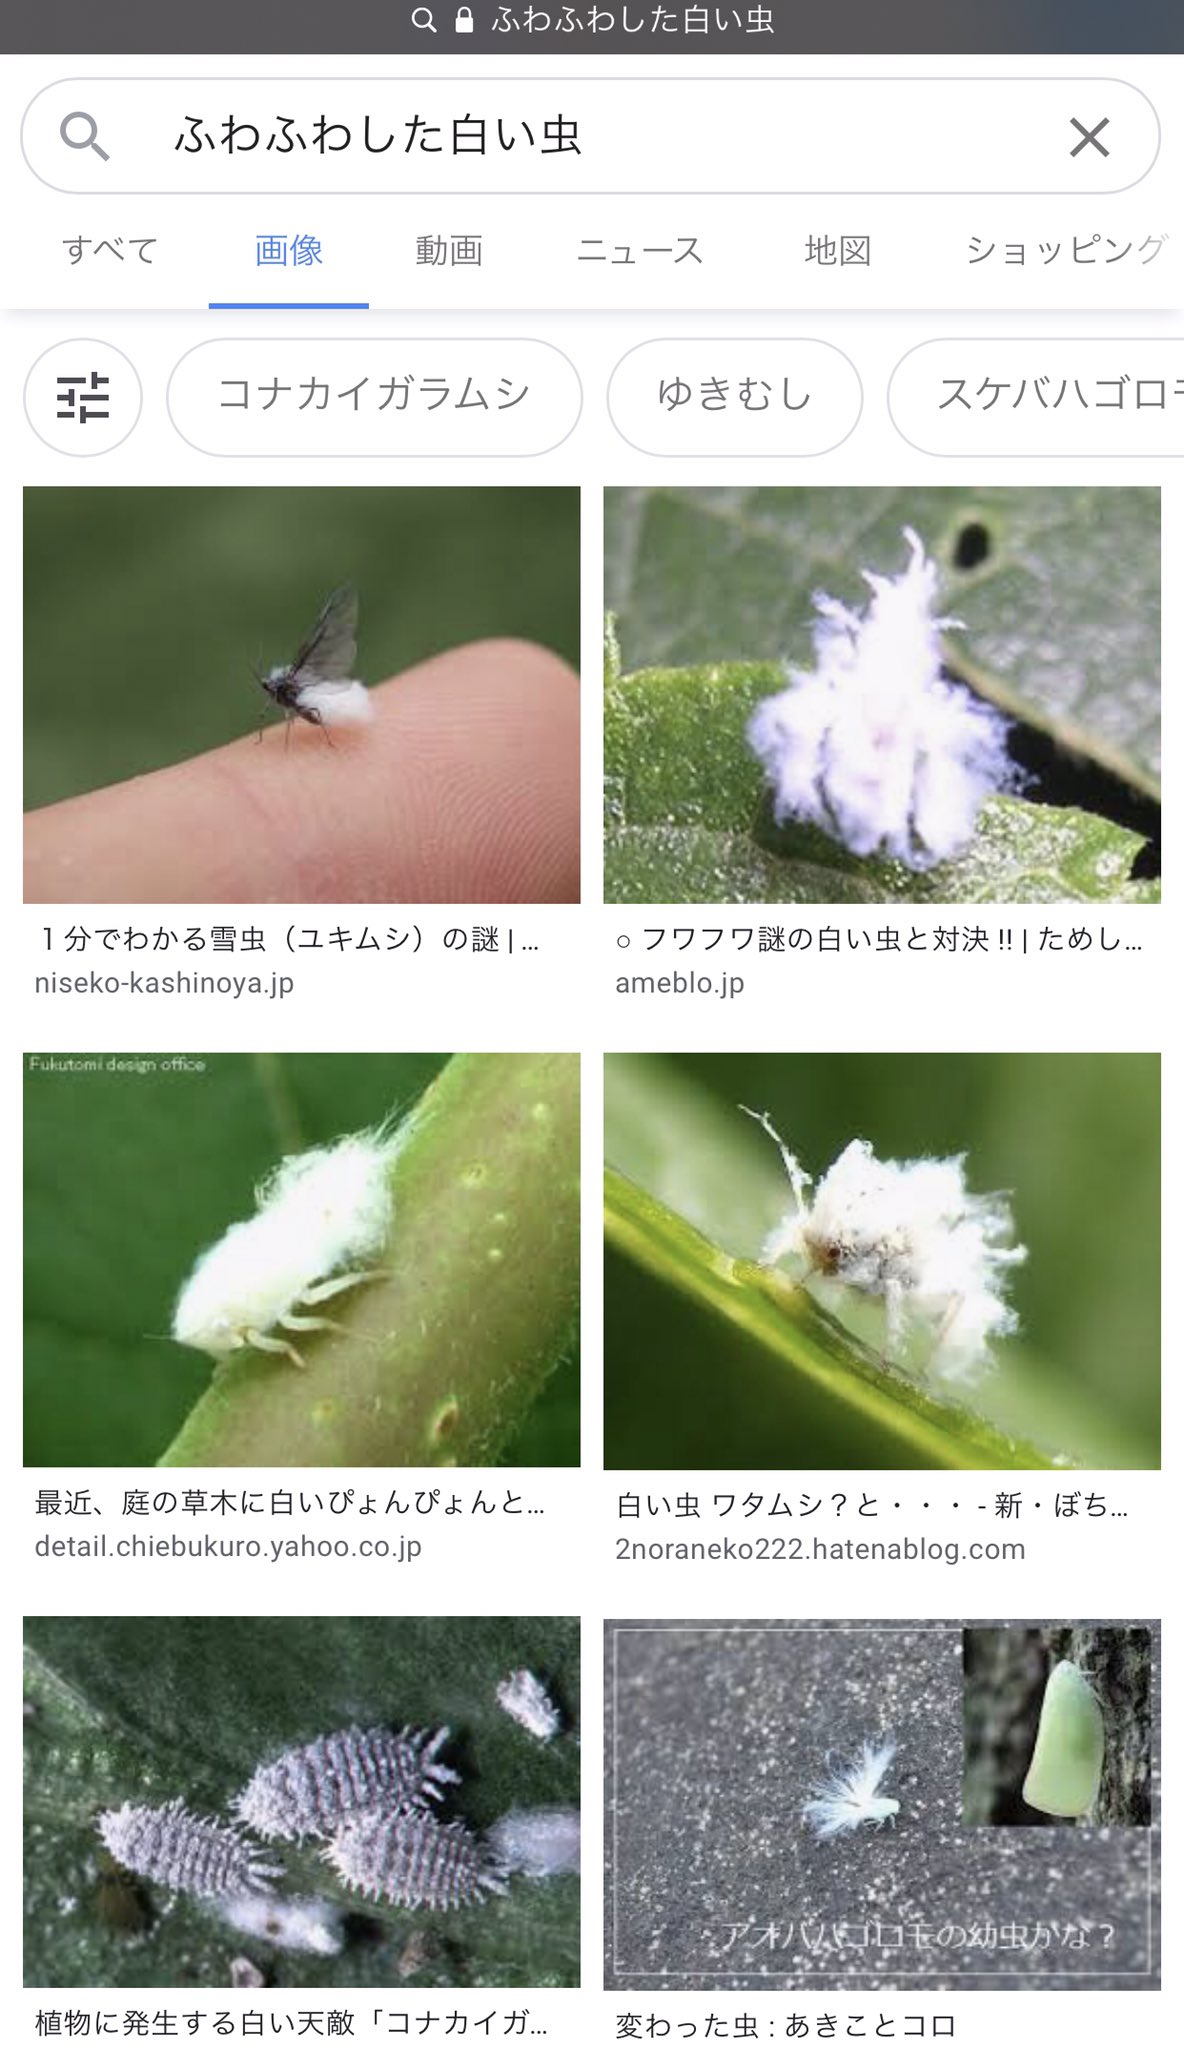 Twitter 上的 赤松崇麿 Akamatsu Takamaro そういえば日中 白いふわふわした小さな虫が何匹も飛んでいたなと思って ふわふわした白い虫 でググったら 思ったほど可愛くなかった T Co Wvcmfsolar Twitter